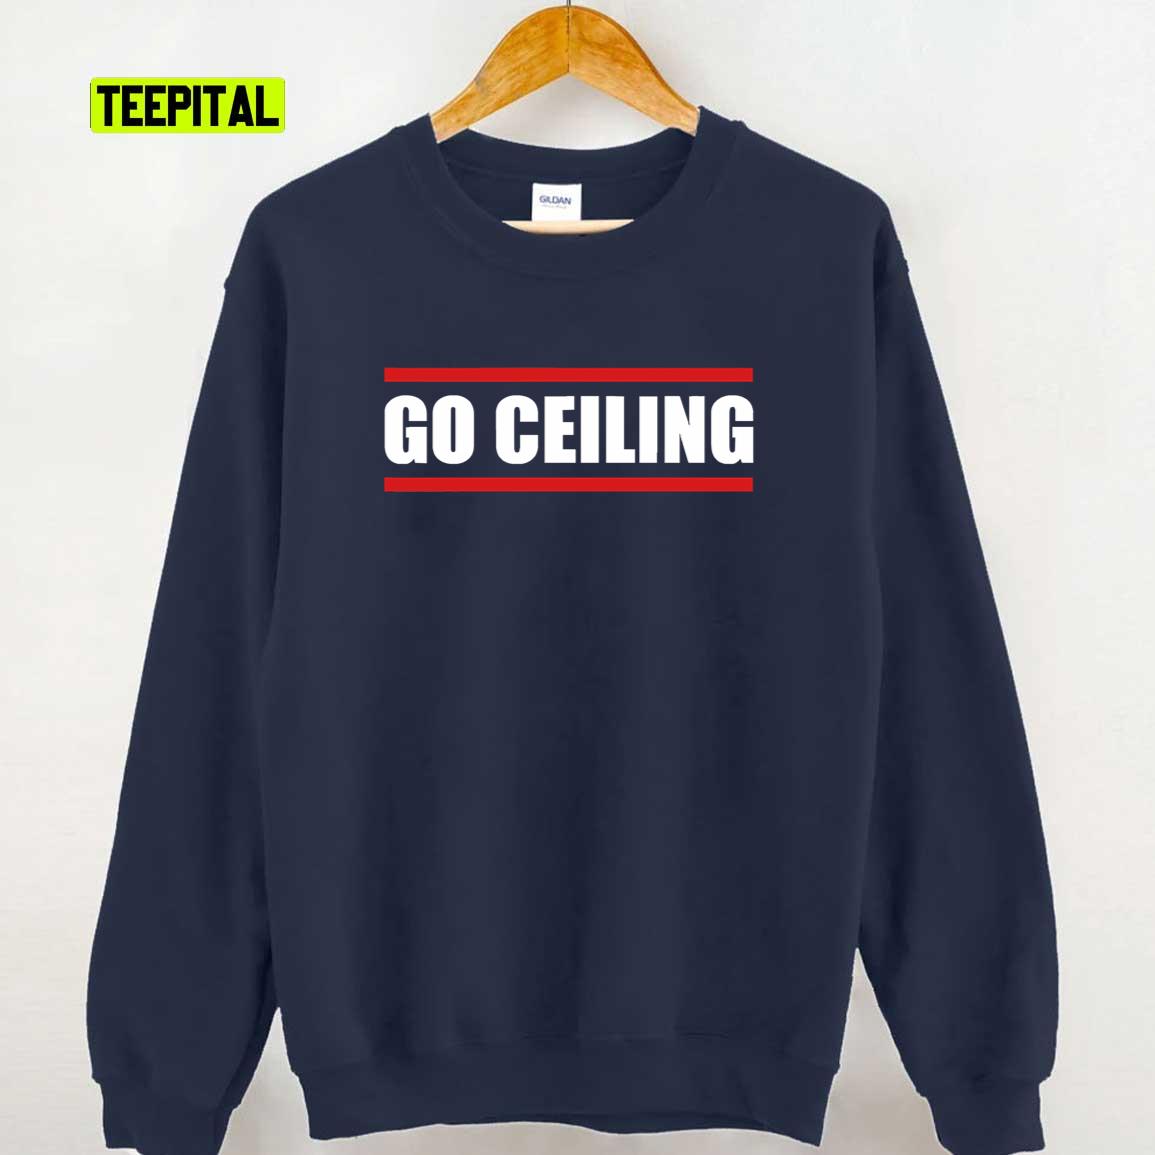 Let's Go Ceiling Funny T-Shirt Sweatshirt